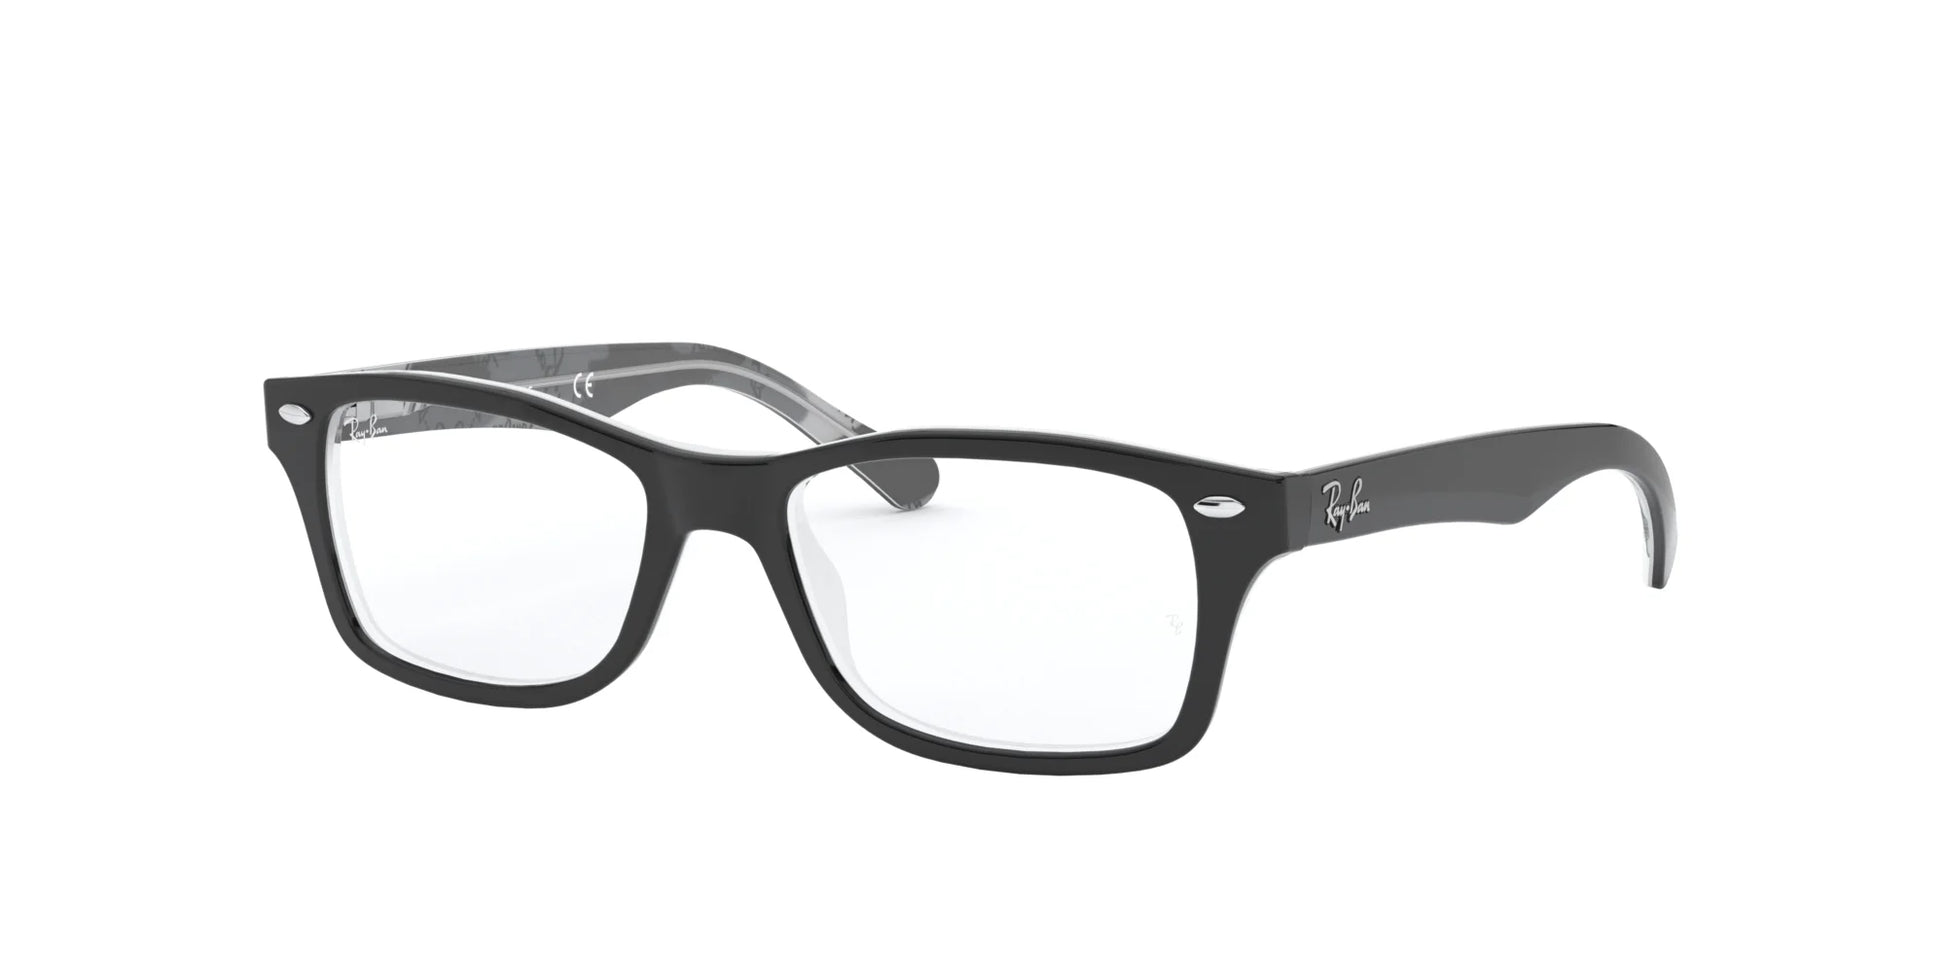 Ray-Ban RY1531 Eyeglasses Black On Grey